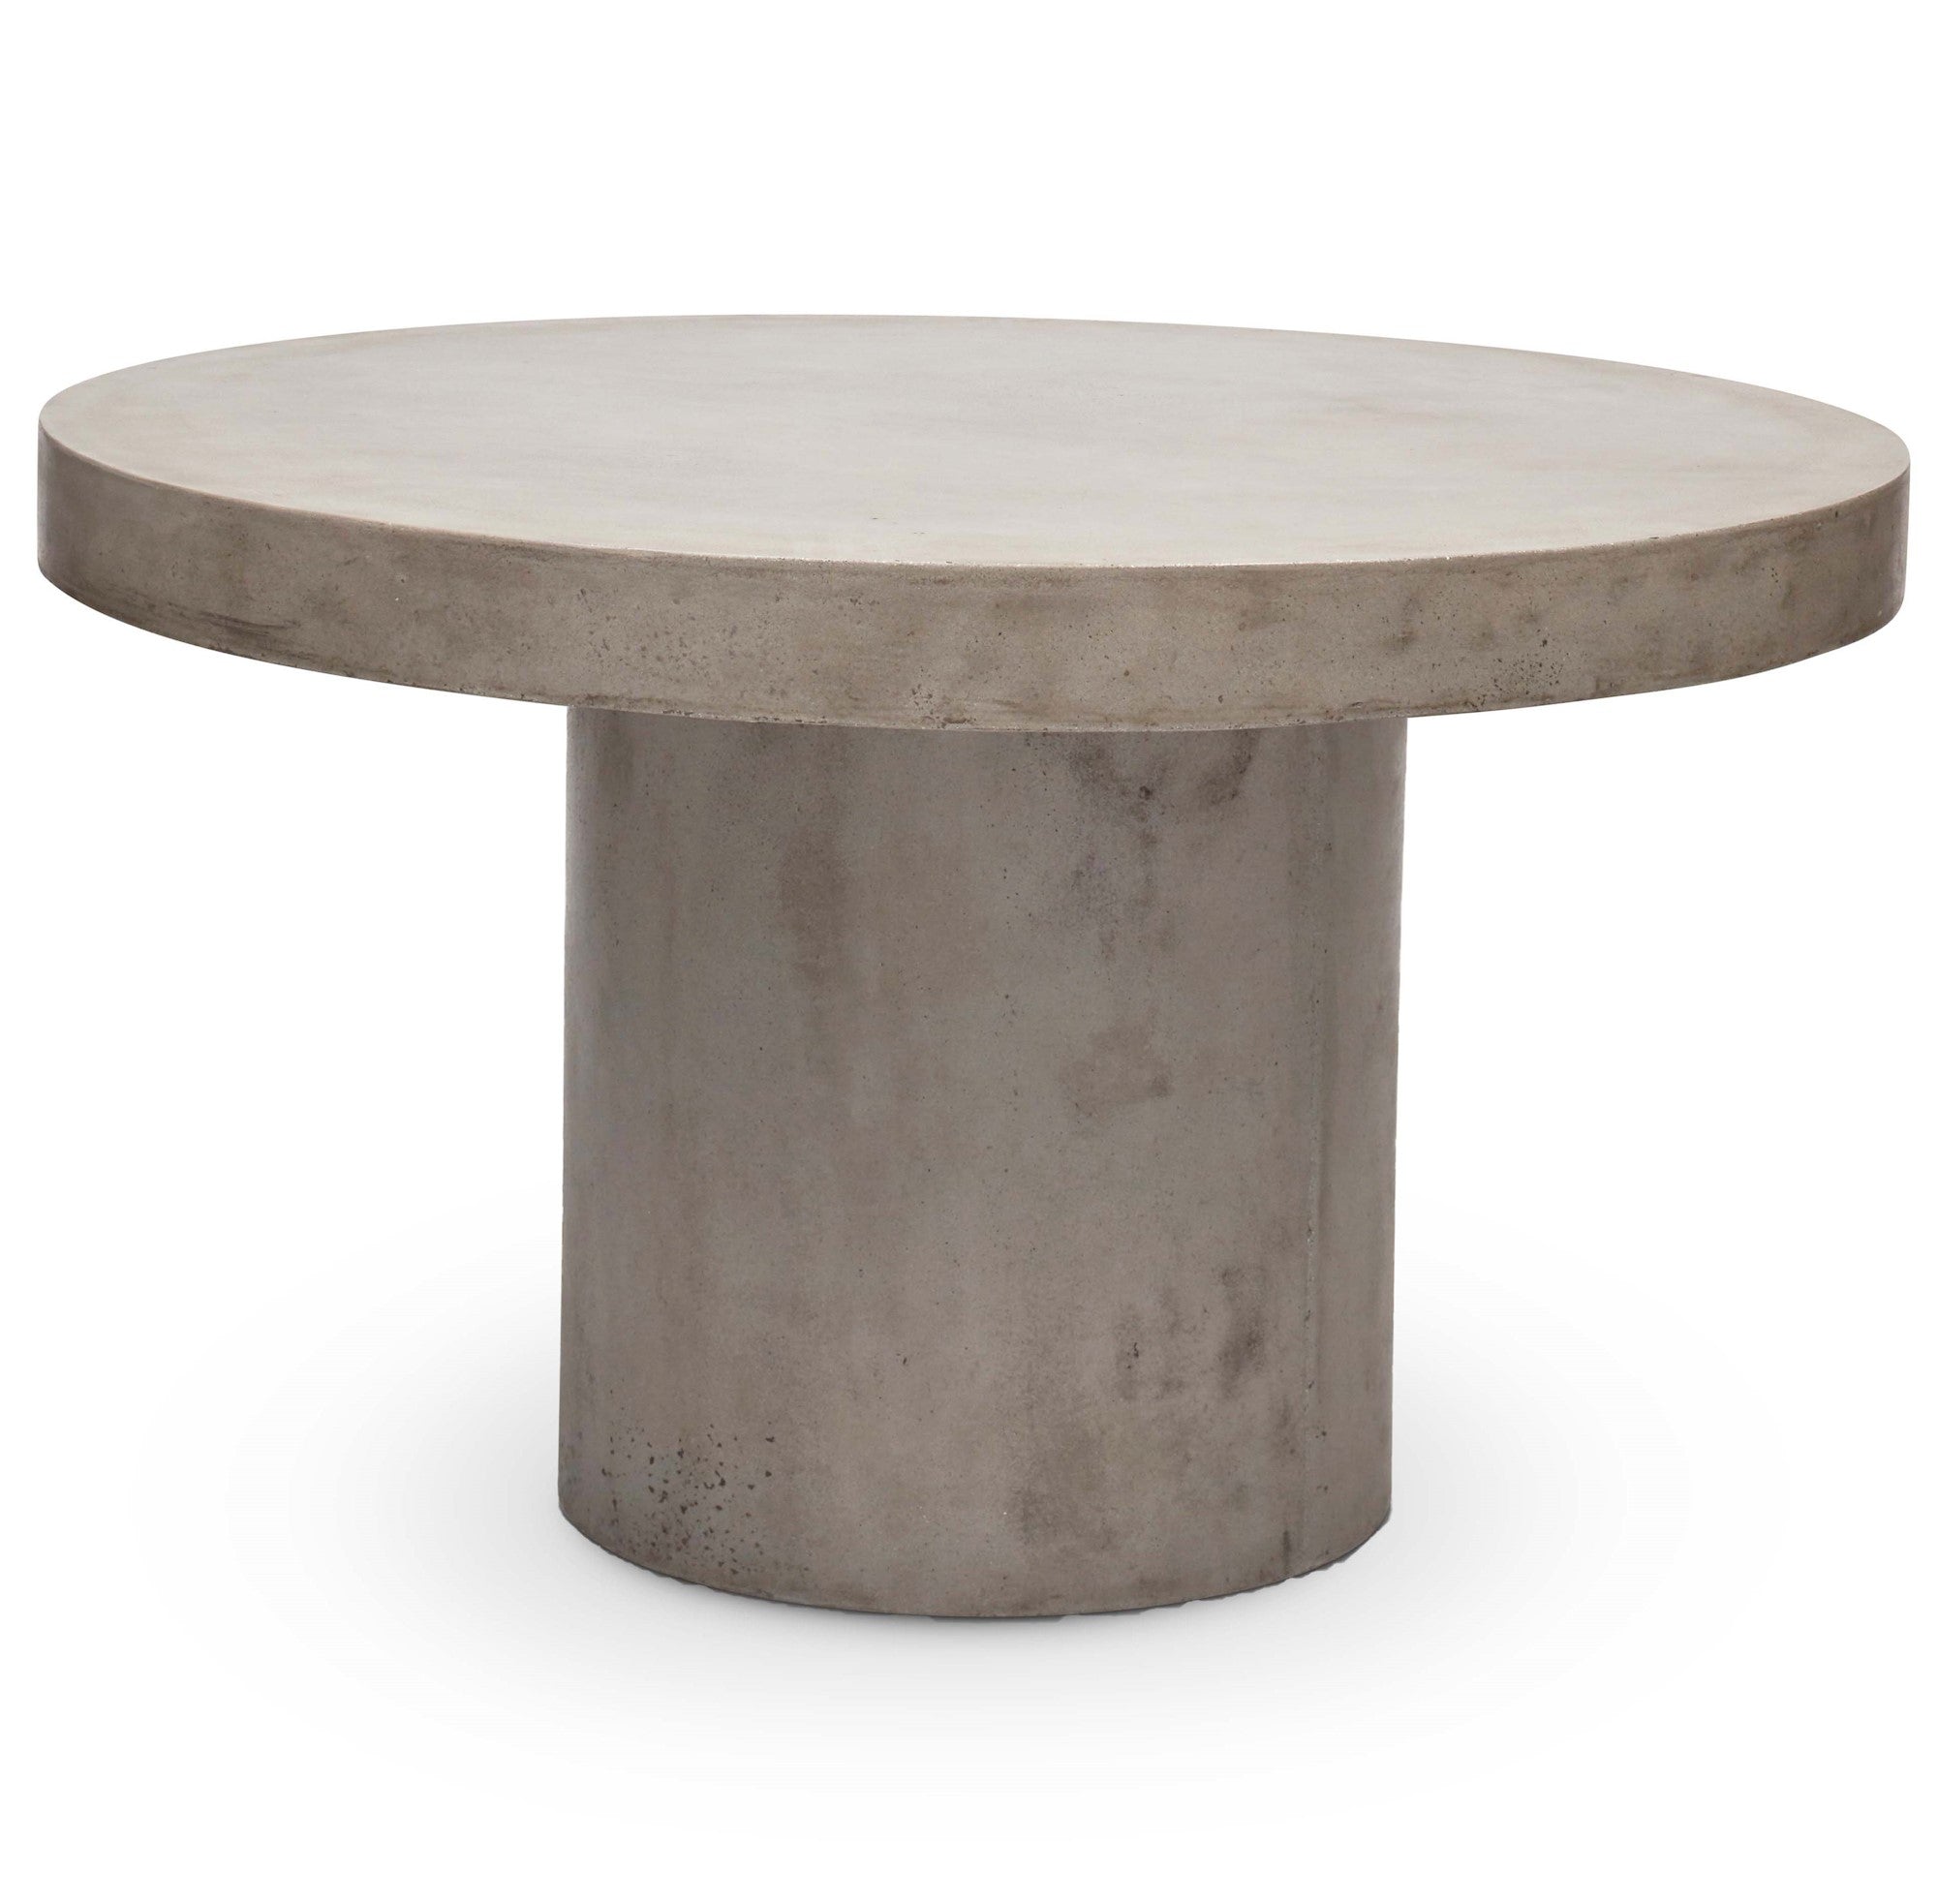 Circa concrete dark gray 60” dining table BASE ONLY - EJ757